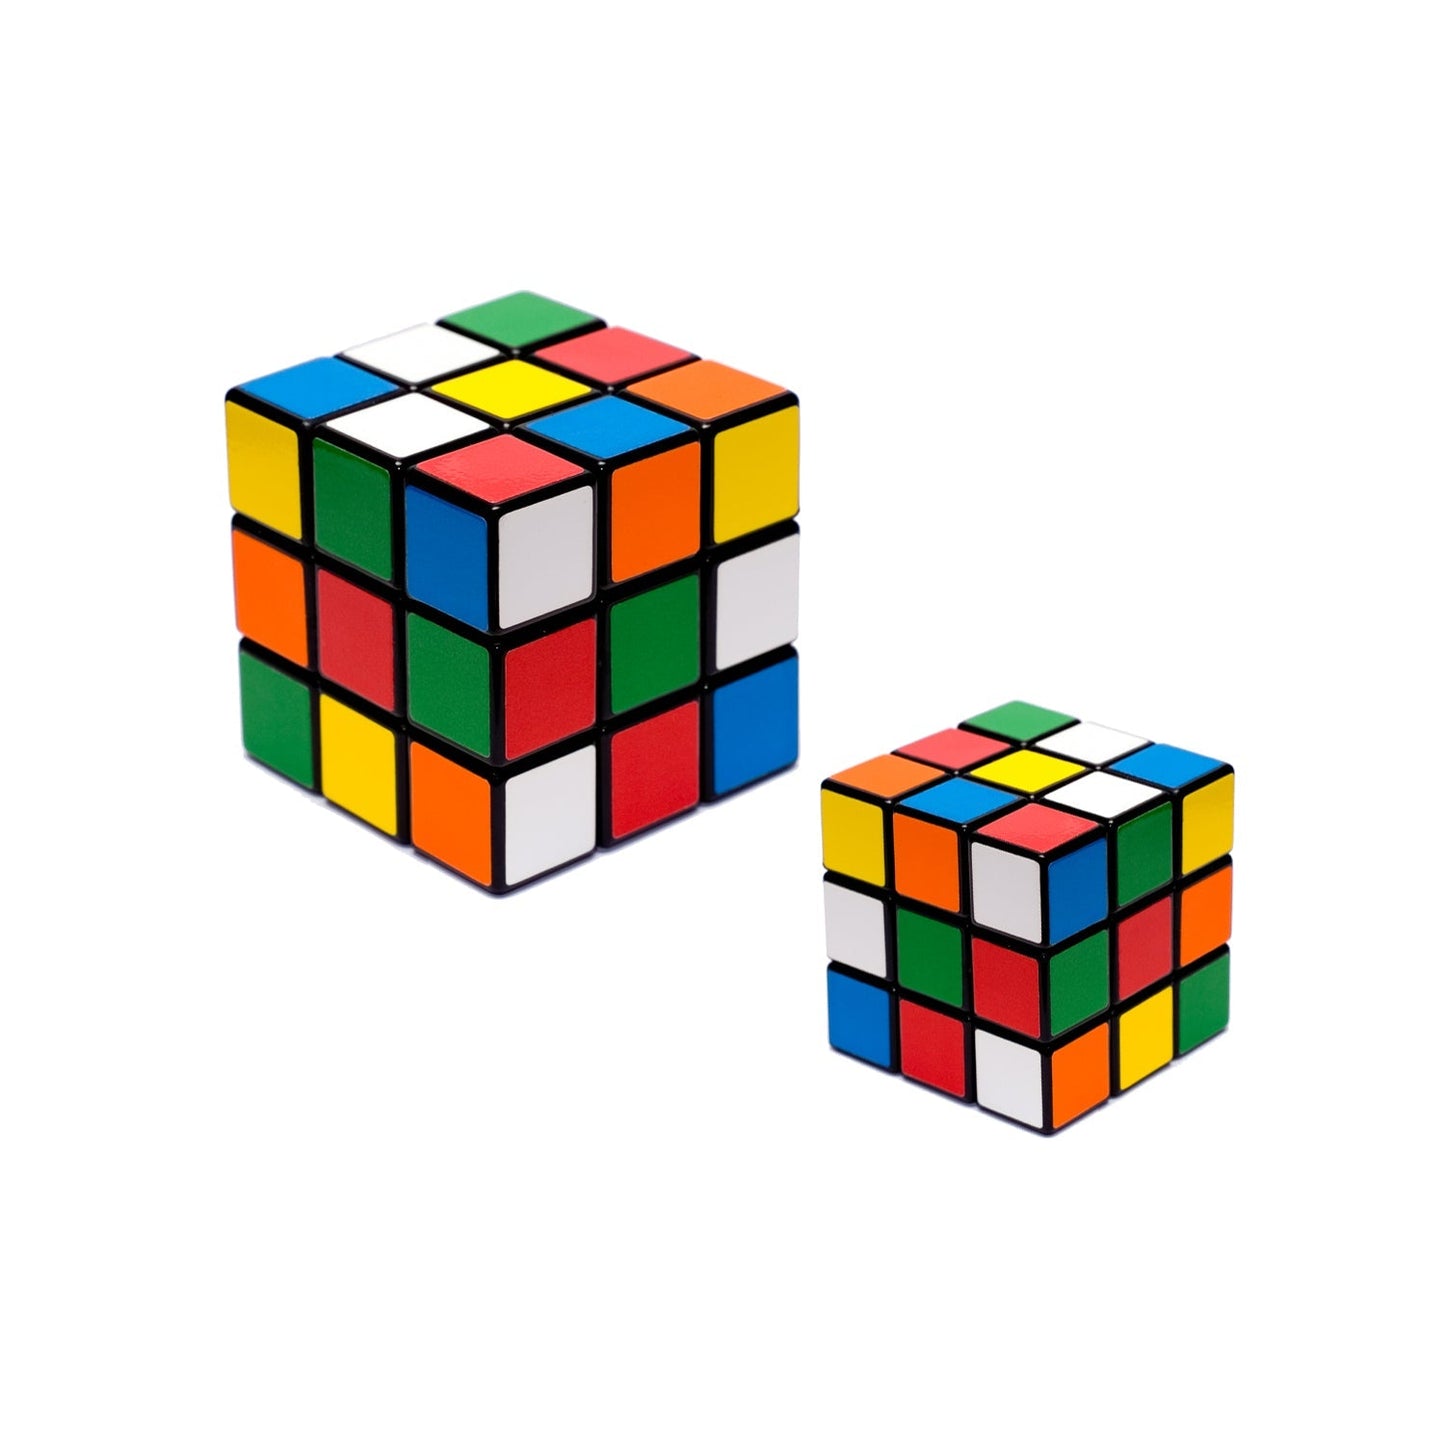 4817 Plastic Fancy 3x3 Small Cube Puzzles Game - 2 Pieces (Multicolour) 